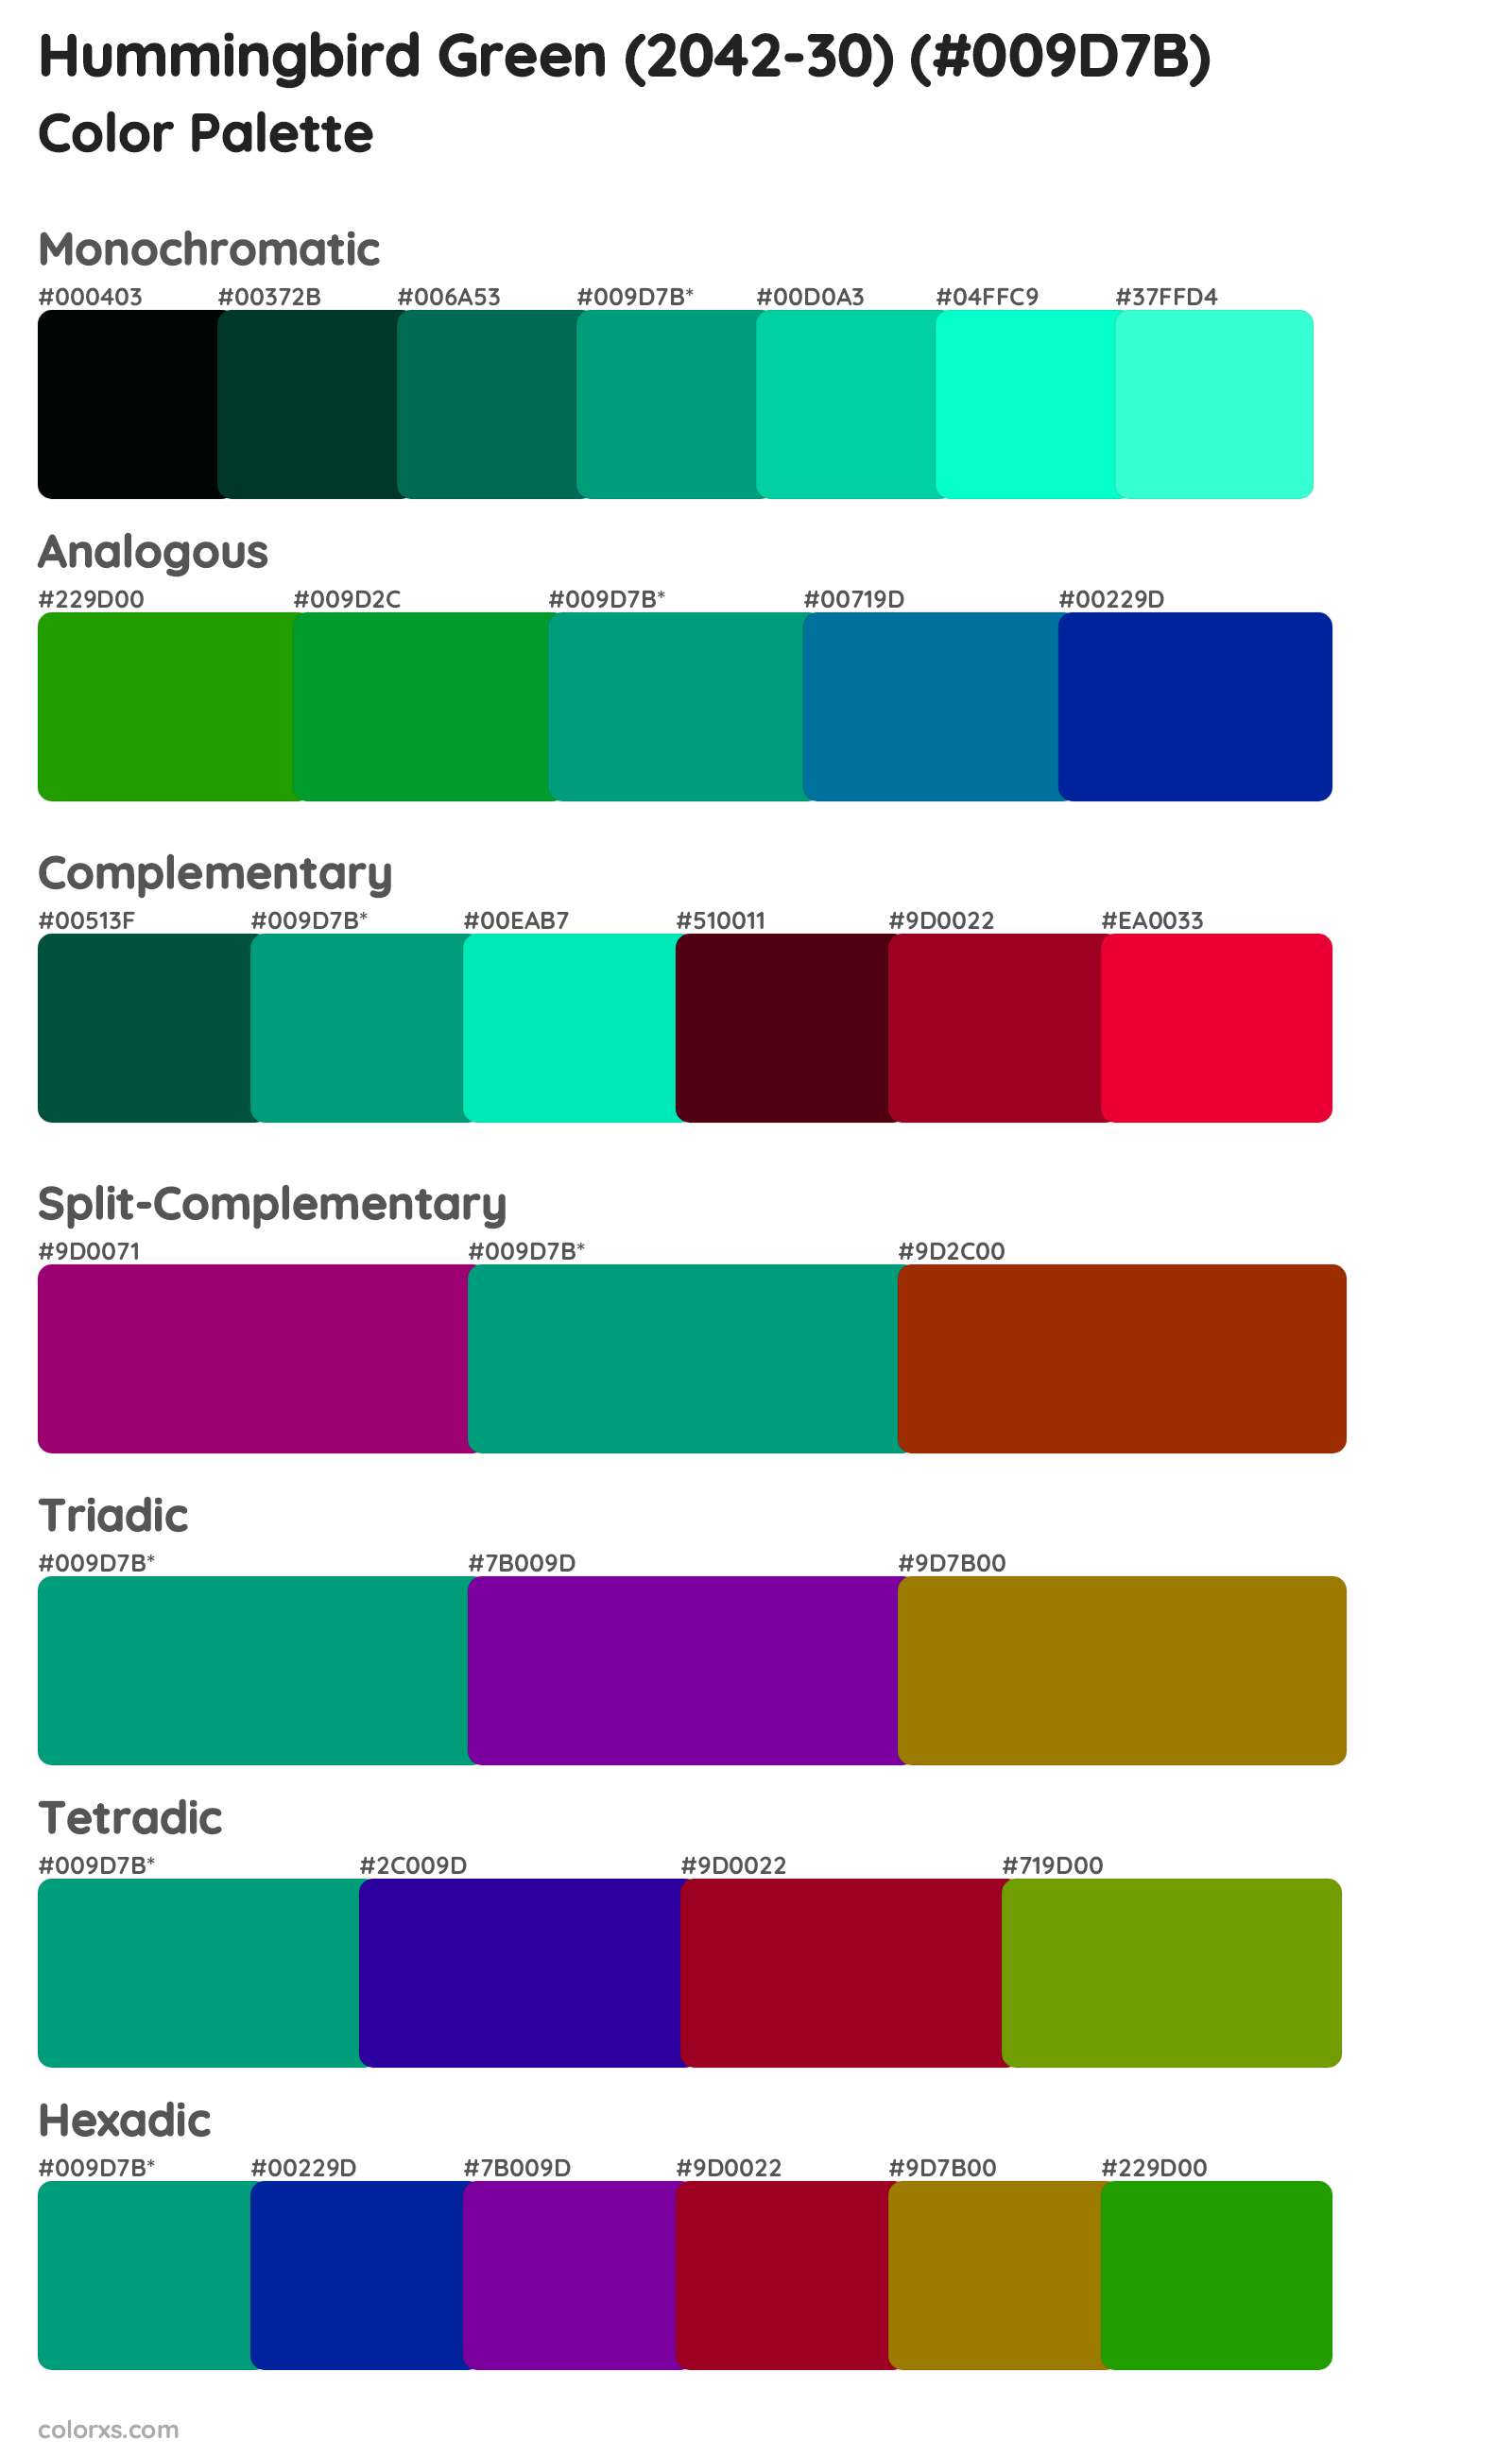 Hummingbird Green (2042-30) Color Scheme Palettes